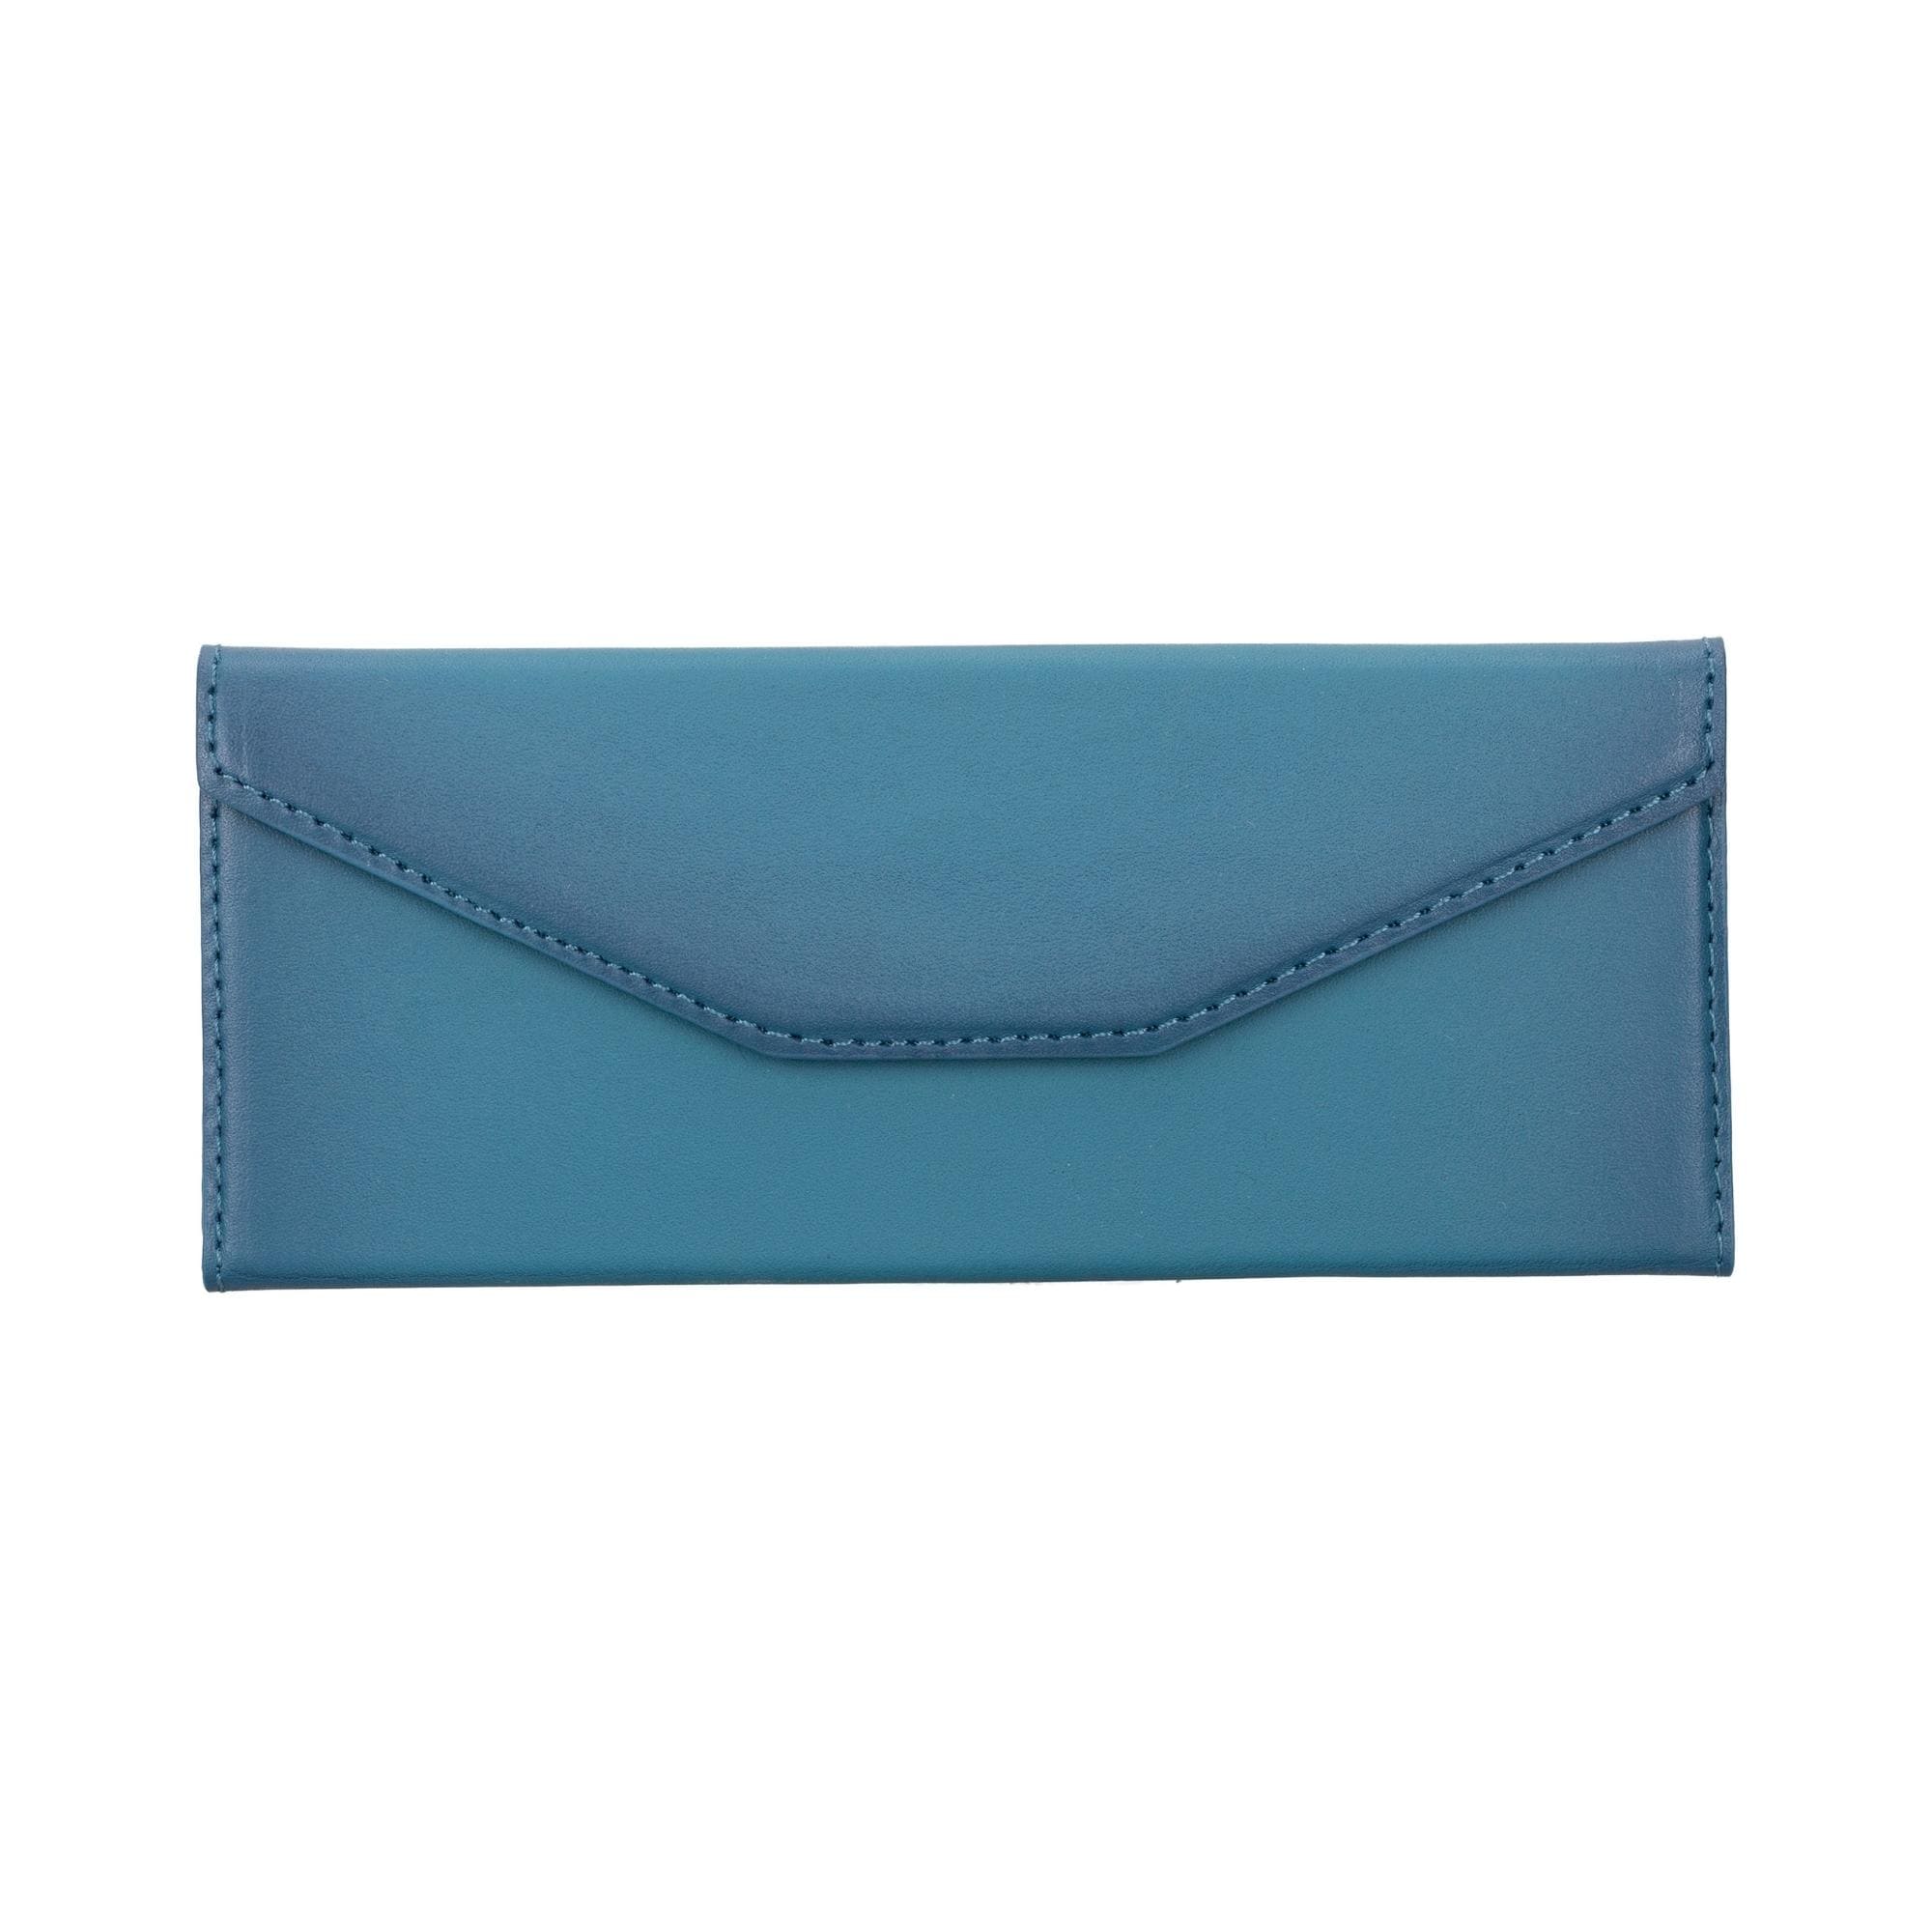 Triangle Leather Cases for Glasses and Sun Glasses - Blue - TORONATA